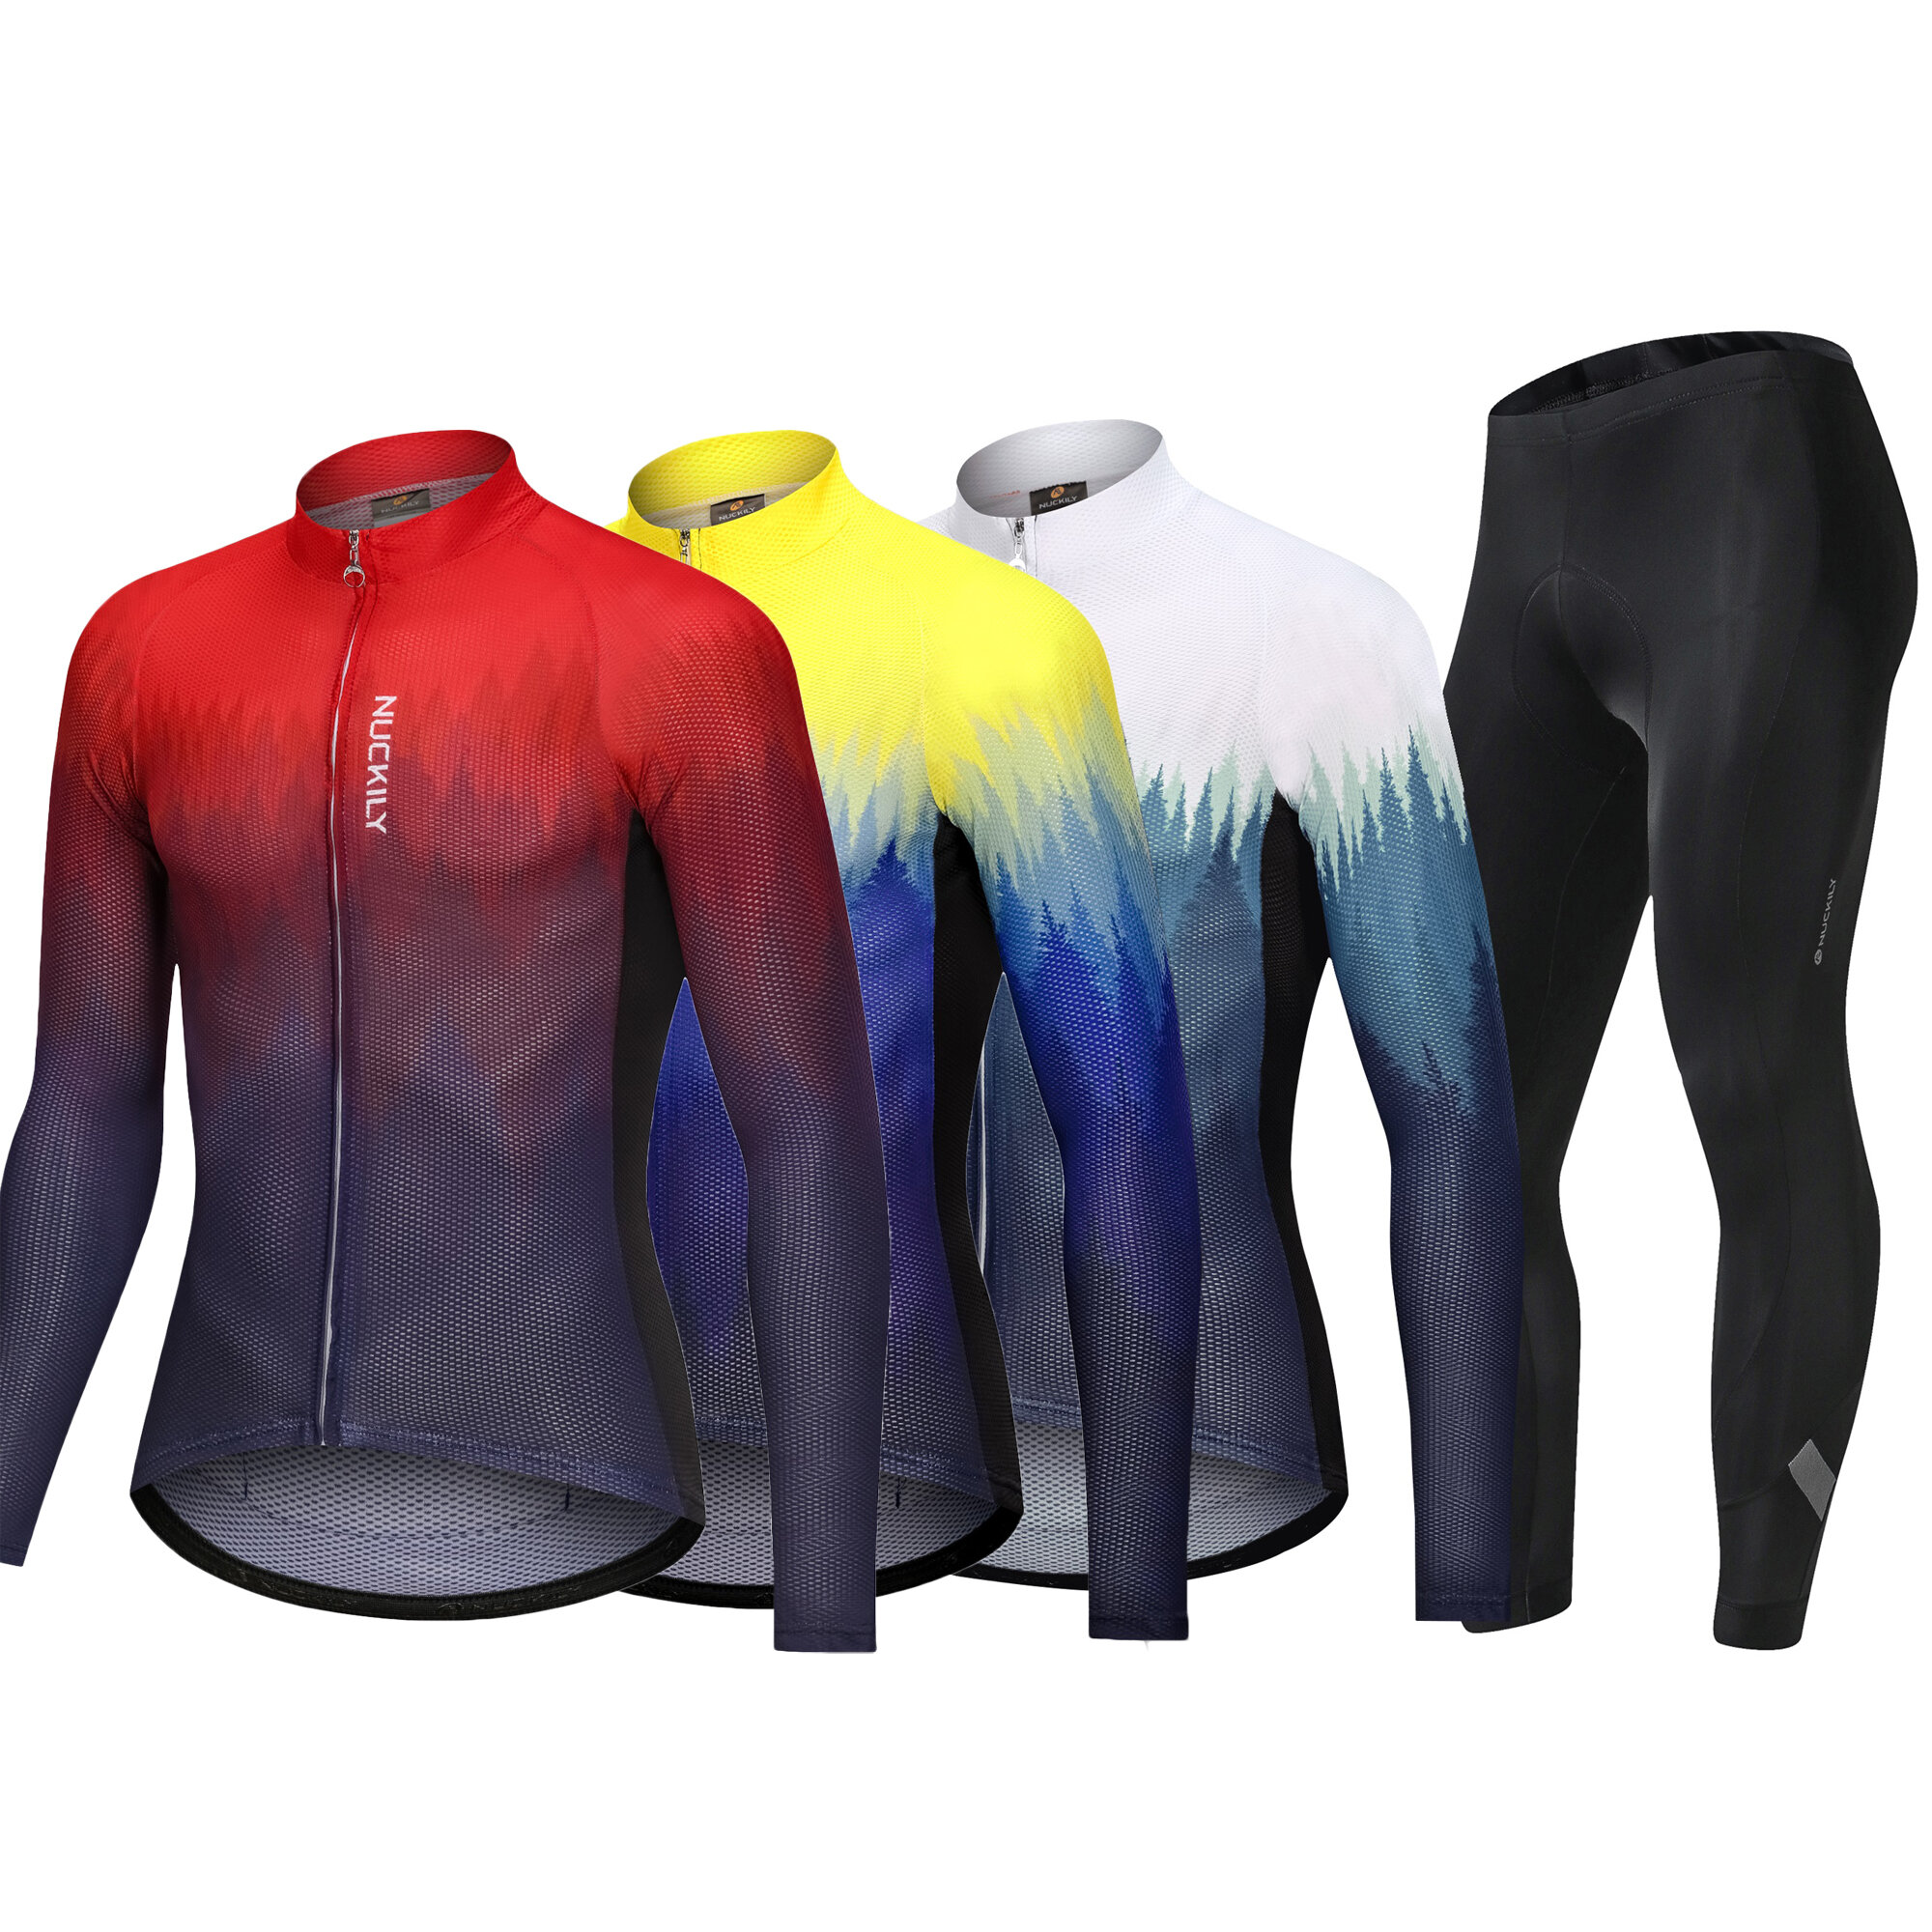 NUCKILY Ανδρικά Σετ Ανδρικά Ρούχα για Ποδήλατα με Αναπνέει Gel Pad Κλίση Χρώμα Γυναικεία Ποδήλατα Οδού Φθορά Sportsuit Cycling Jersey